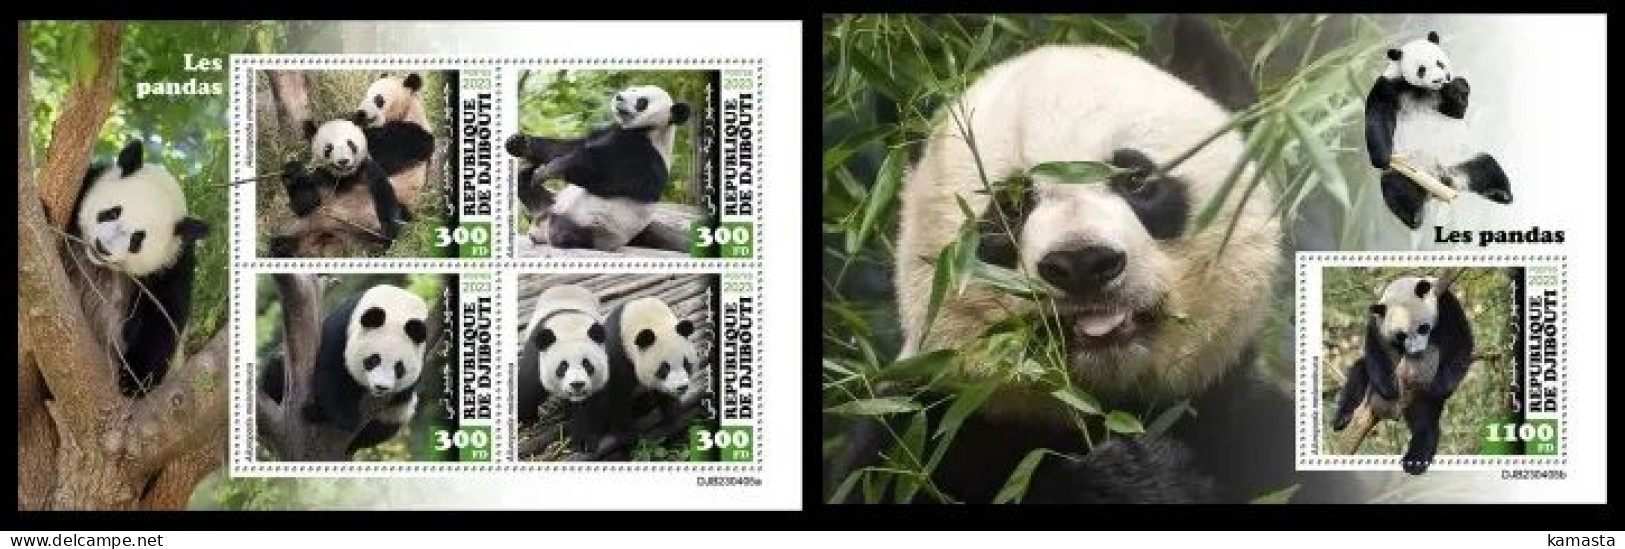 Djibouti 2023 Pandas. (405) OFFICIAL ISSUE - Bears